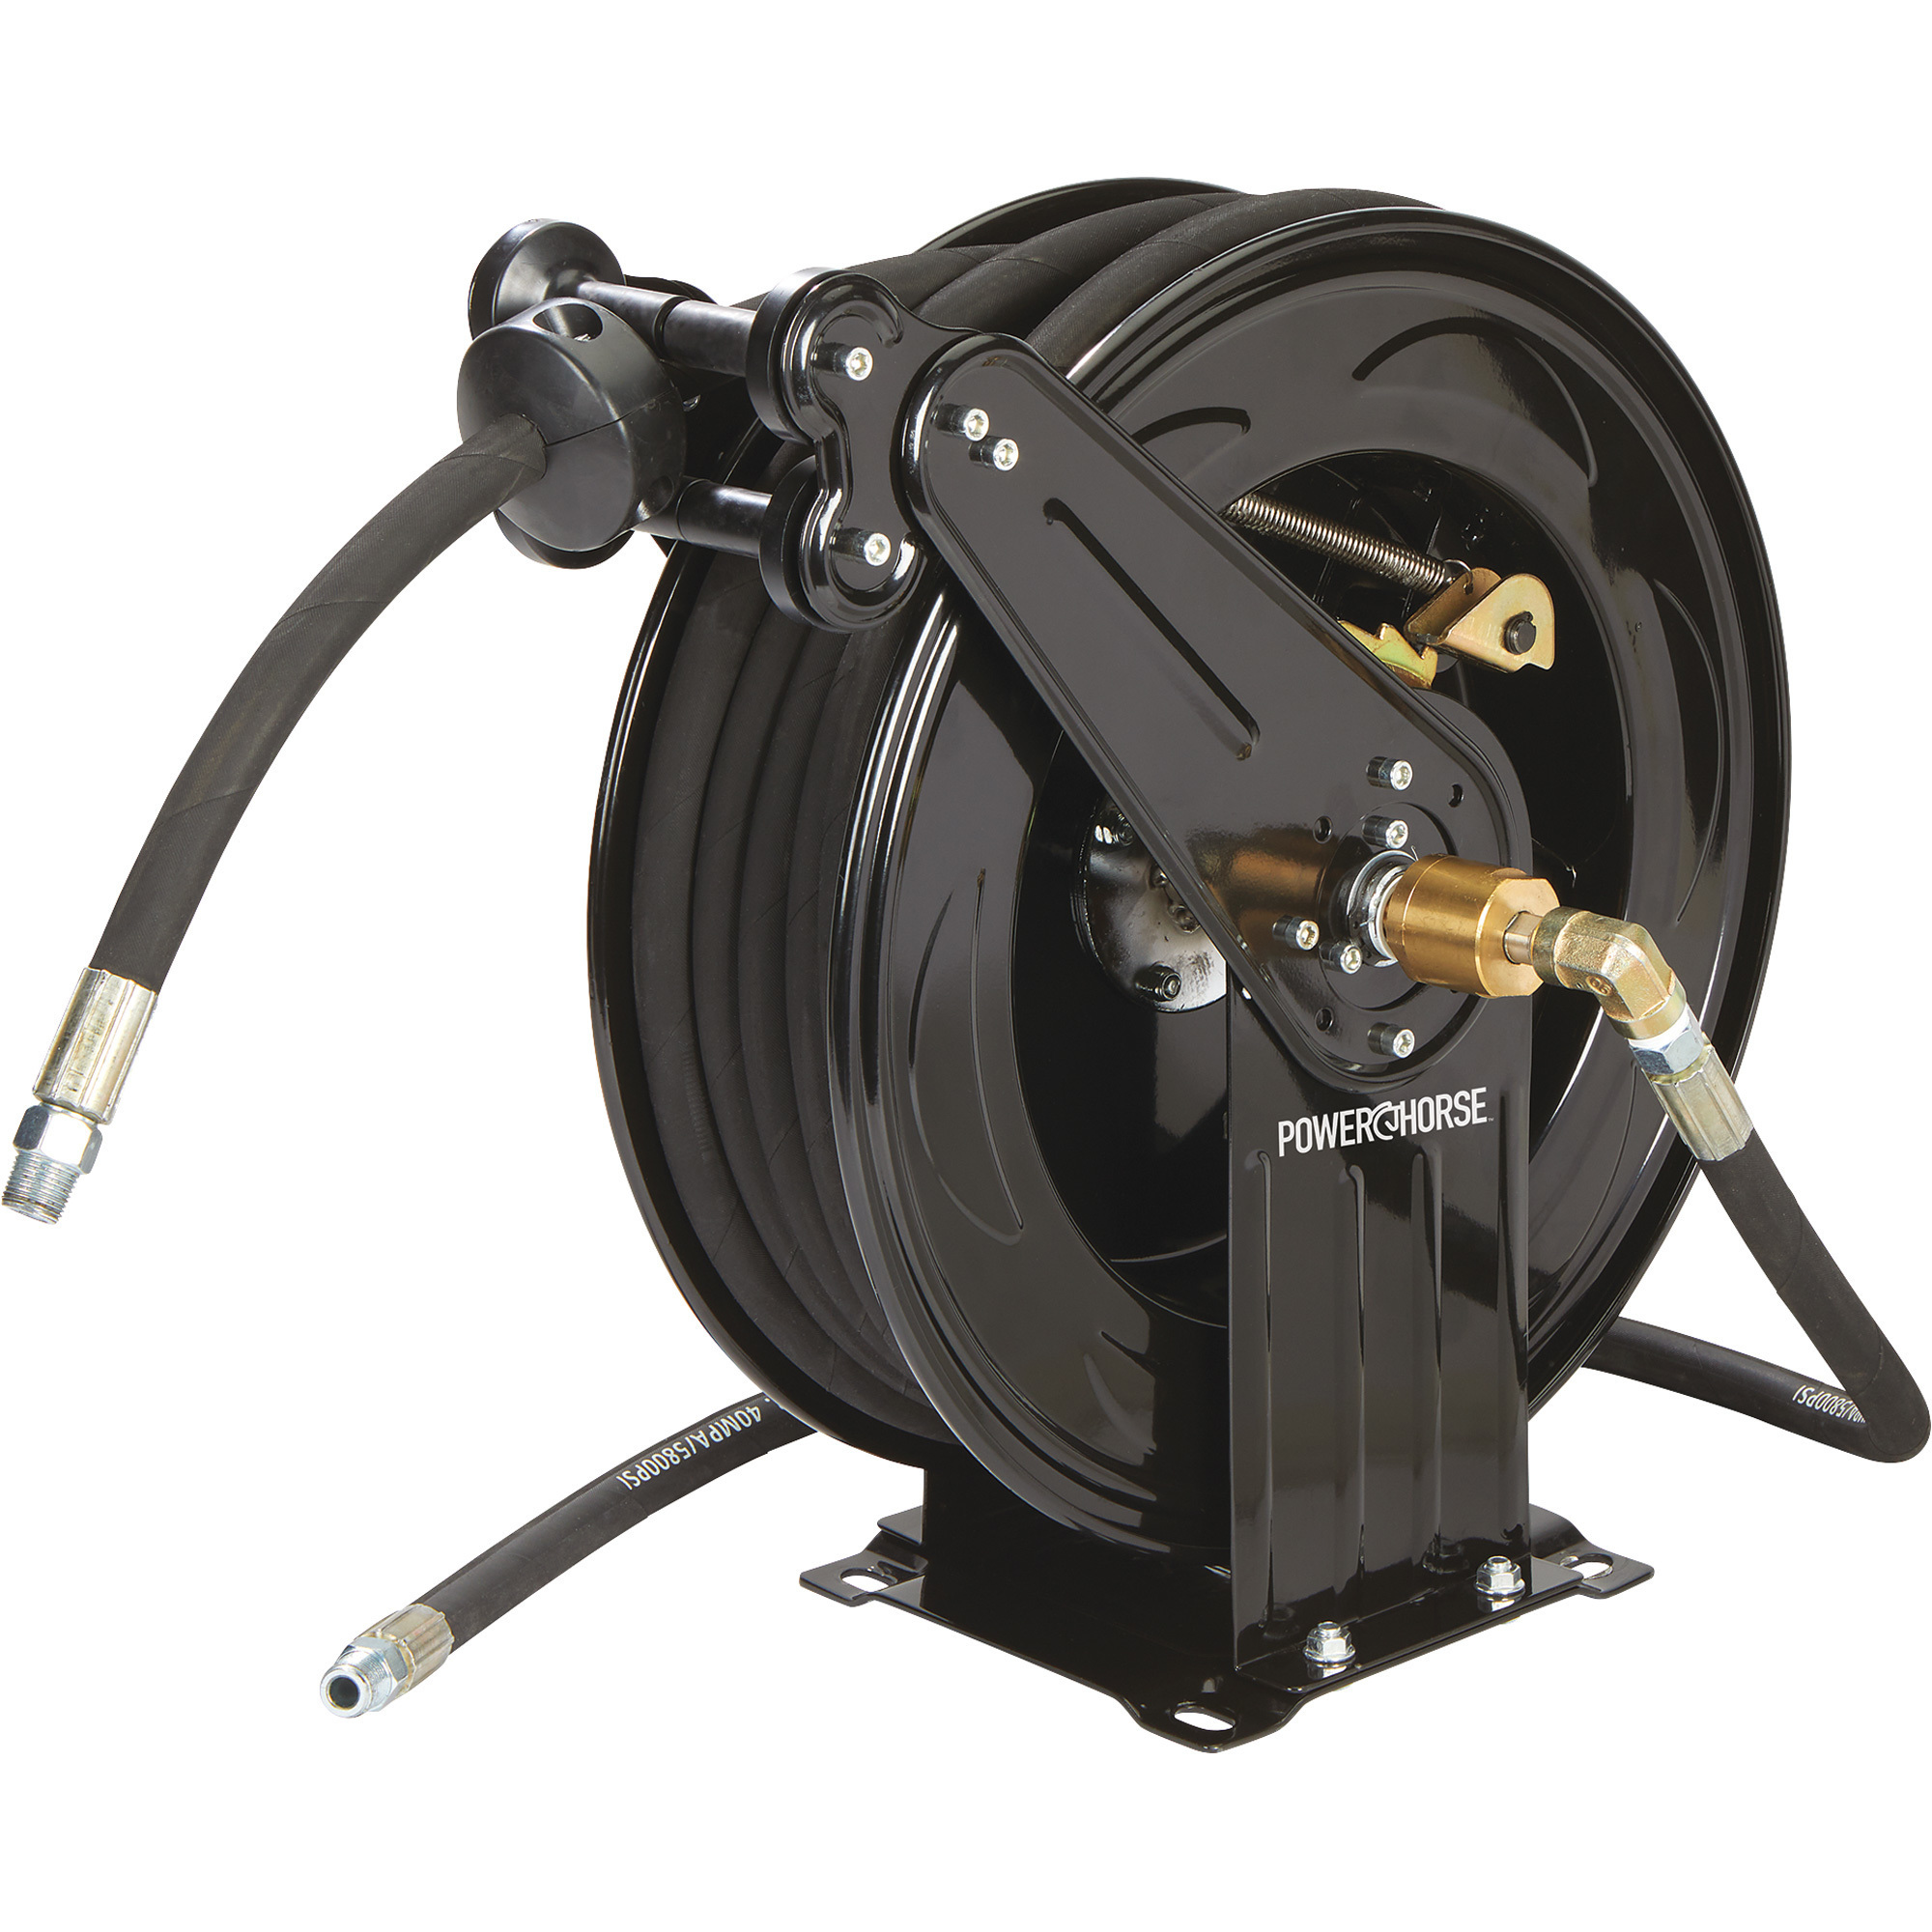 Powerhorse Auto-Rewind Pressure Washer Hose Reel, 4000 PSI, 50ft. Capacity